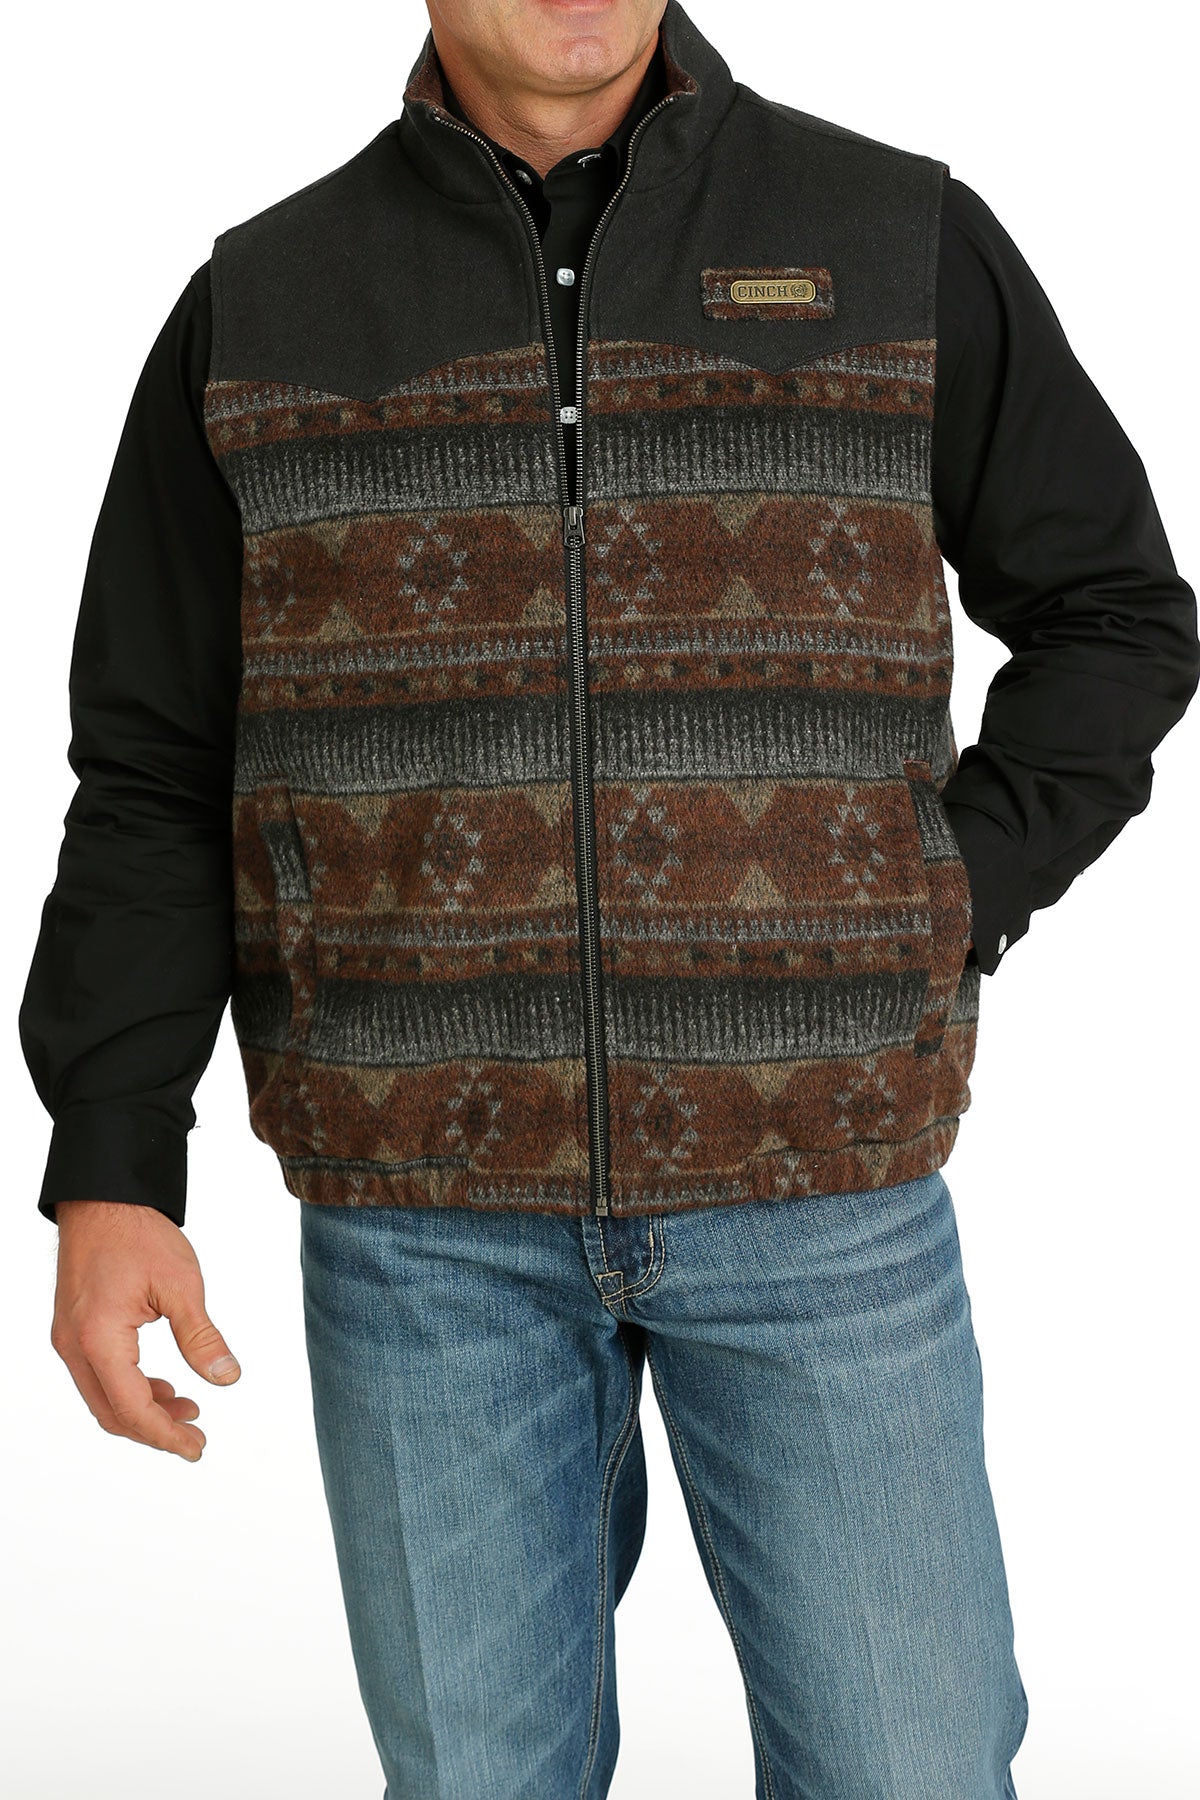 Cinch Men's Concealed Carry Rust Wooly Vest